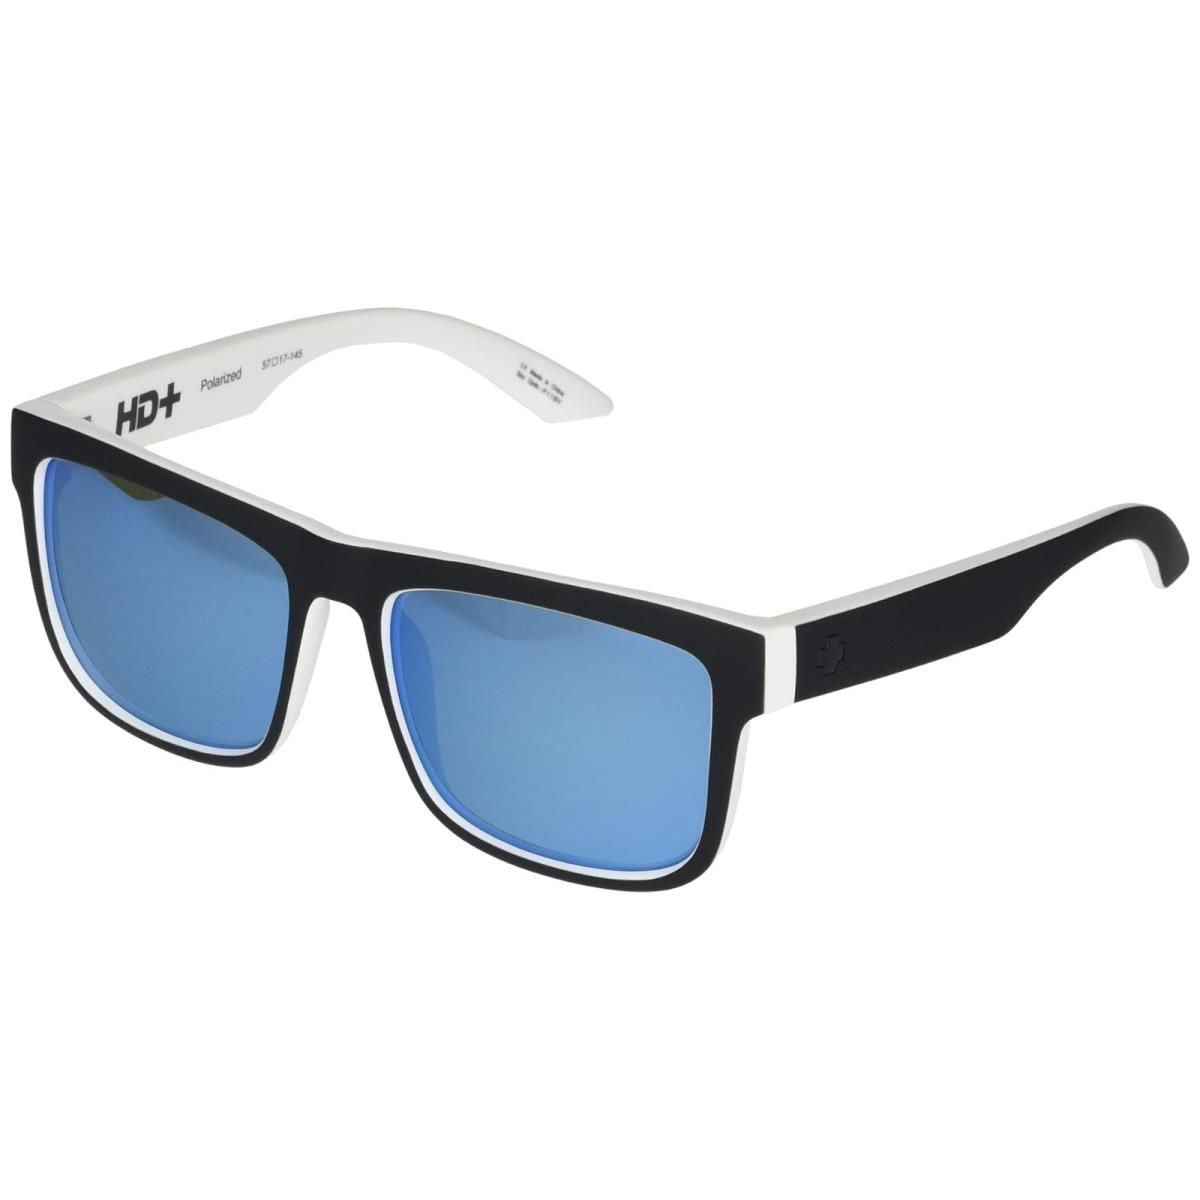 Unisex Sunglasses Spy Optic Discord Whitewall/HD Plus Gray Green Polar/Light Blue Spectra Mirror